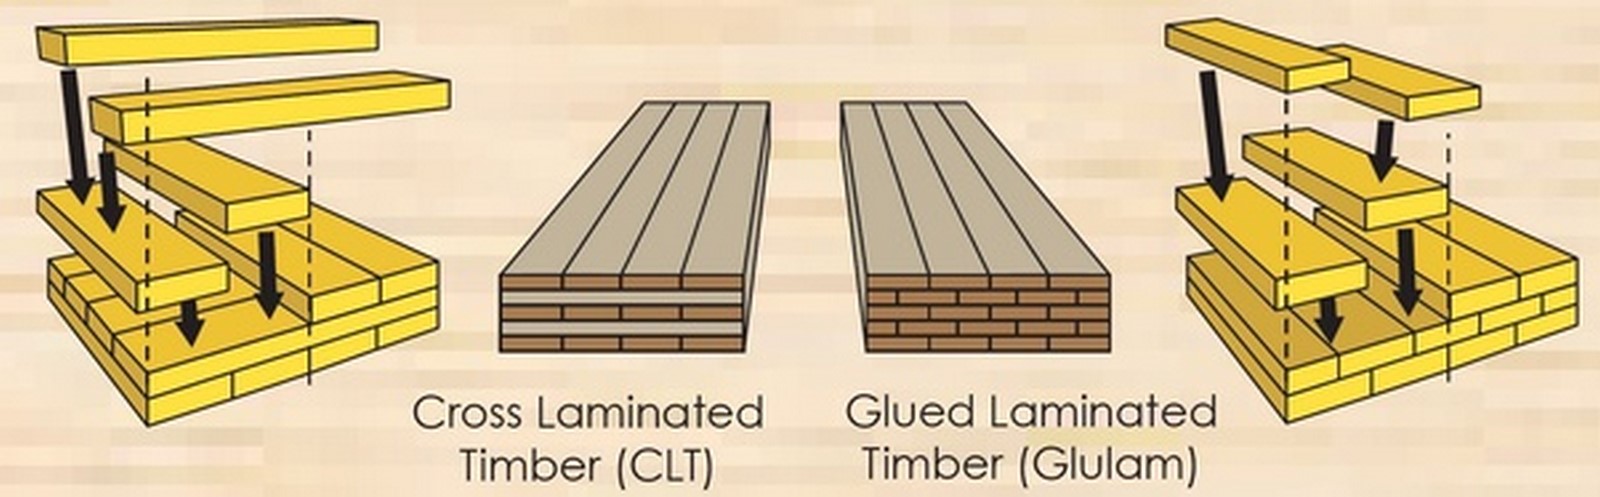 Alternative Materials - Laminated Timber - Sheet2